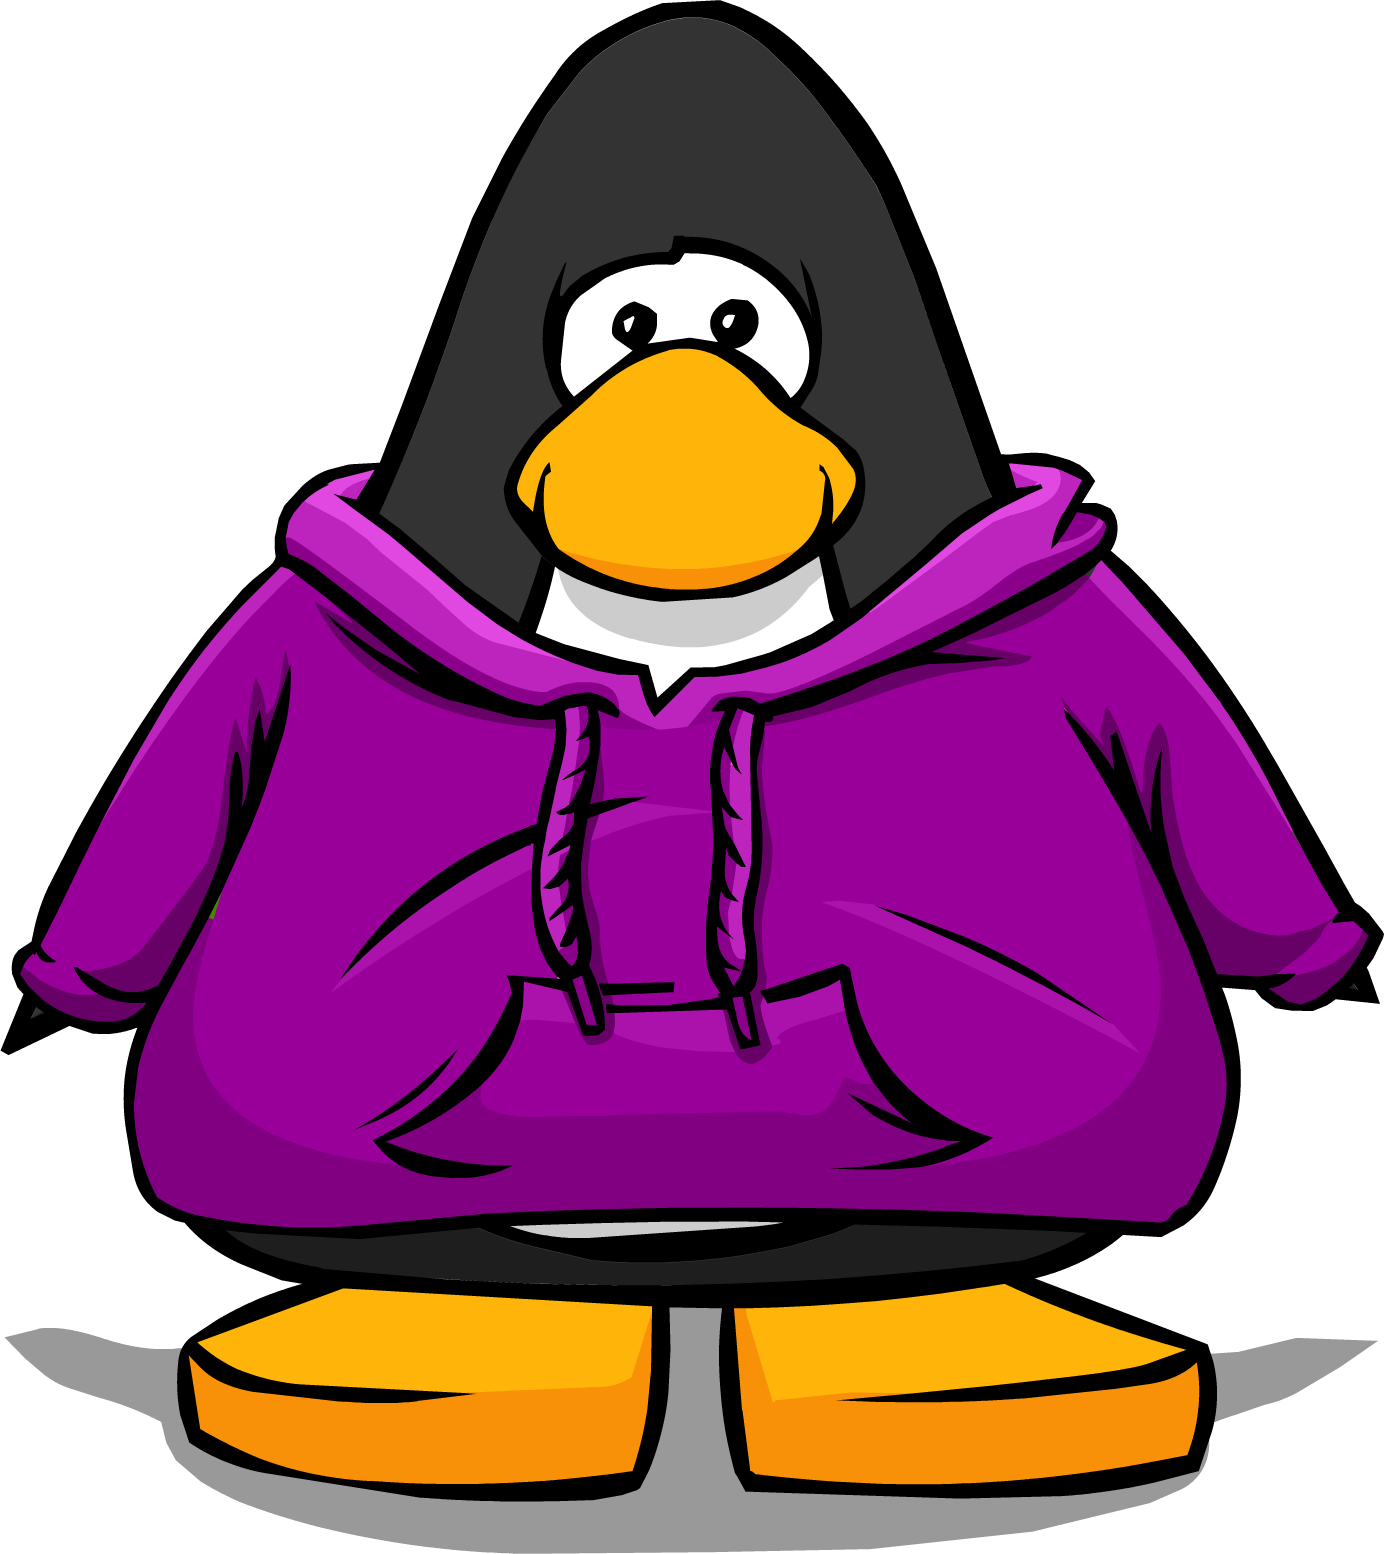 45, March 7, 2018 - Club Penguin Purple Penguin (1384x1554)